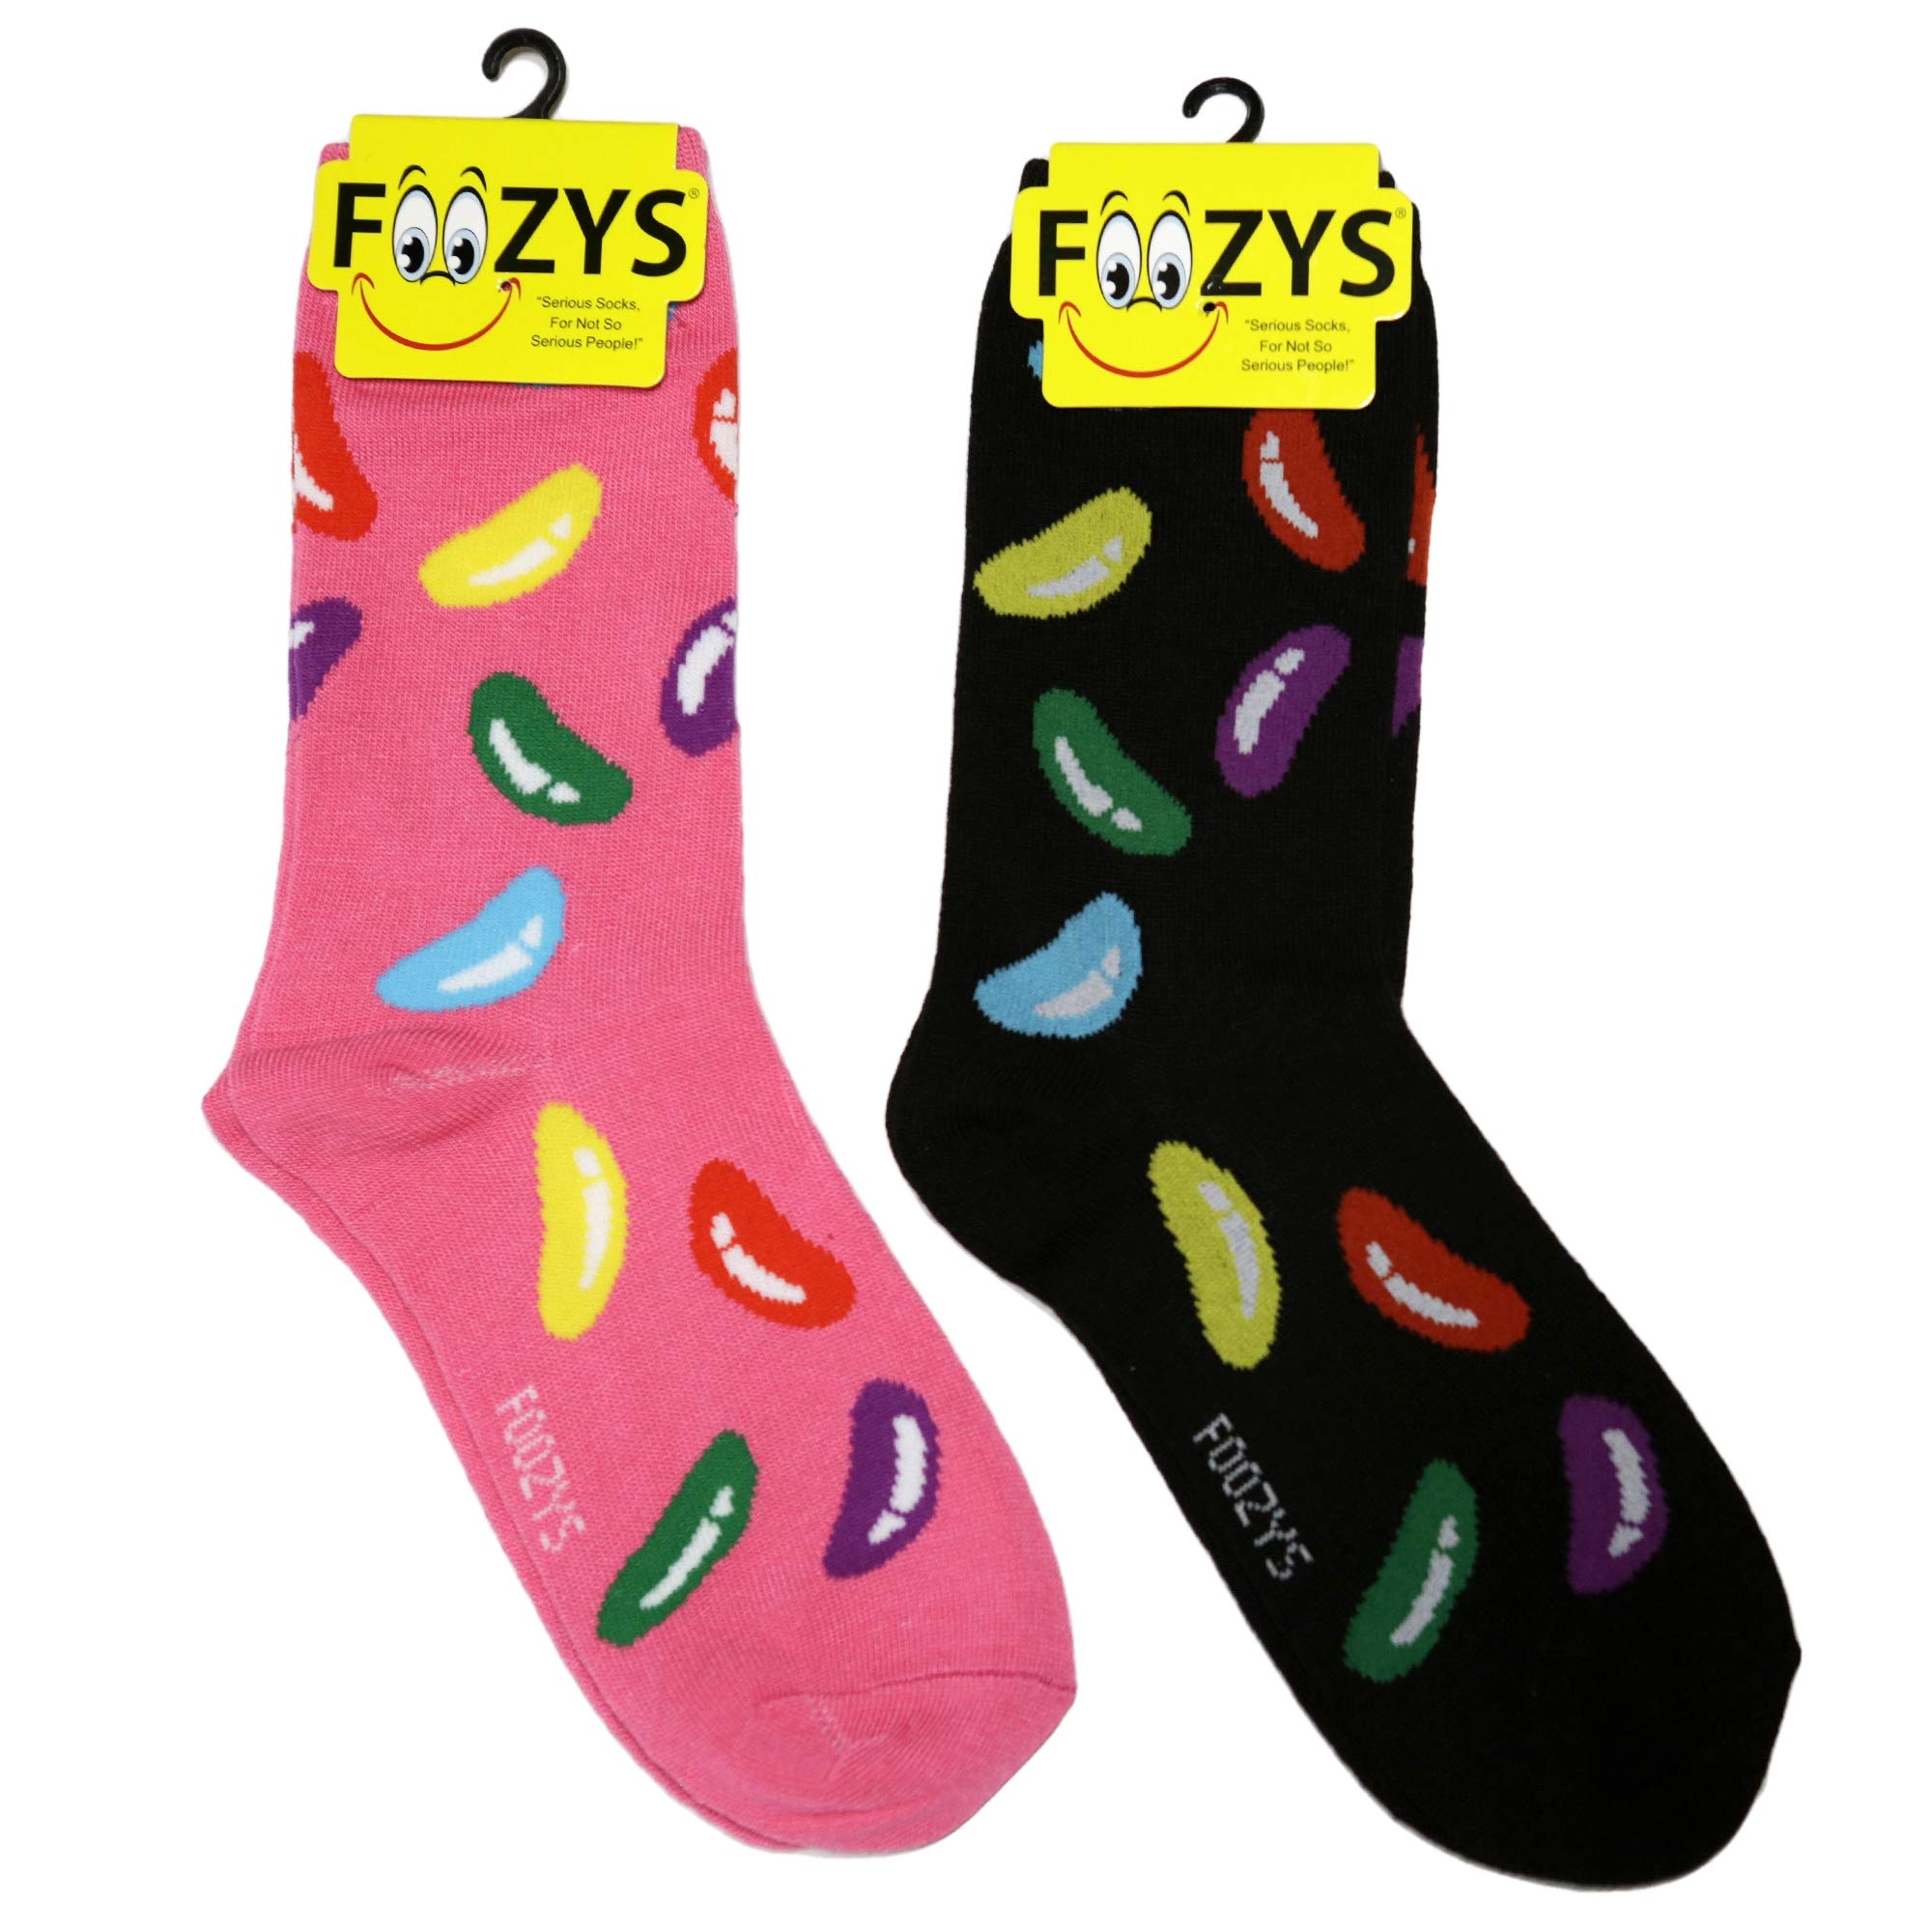 Foozys Women’s Crew Socks | Jelly Beans Sweet Treats Novelty Socks Black